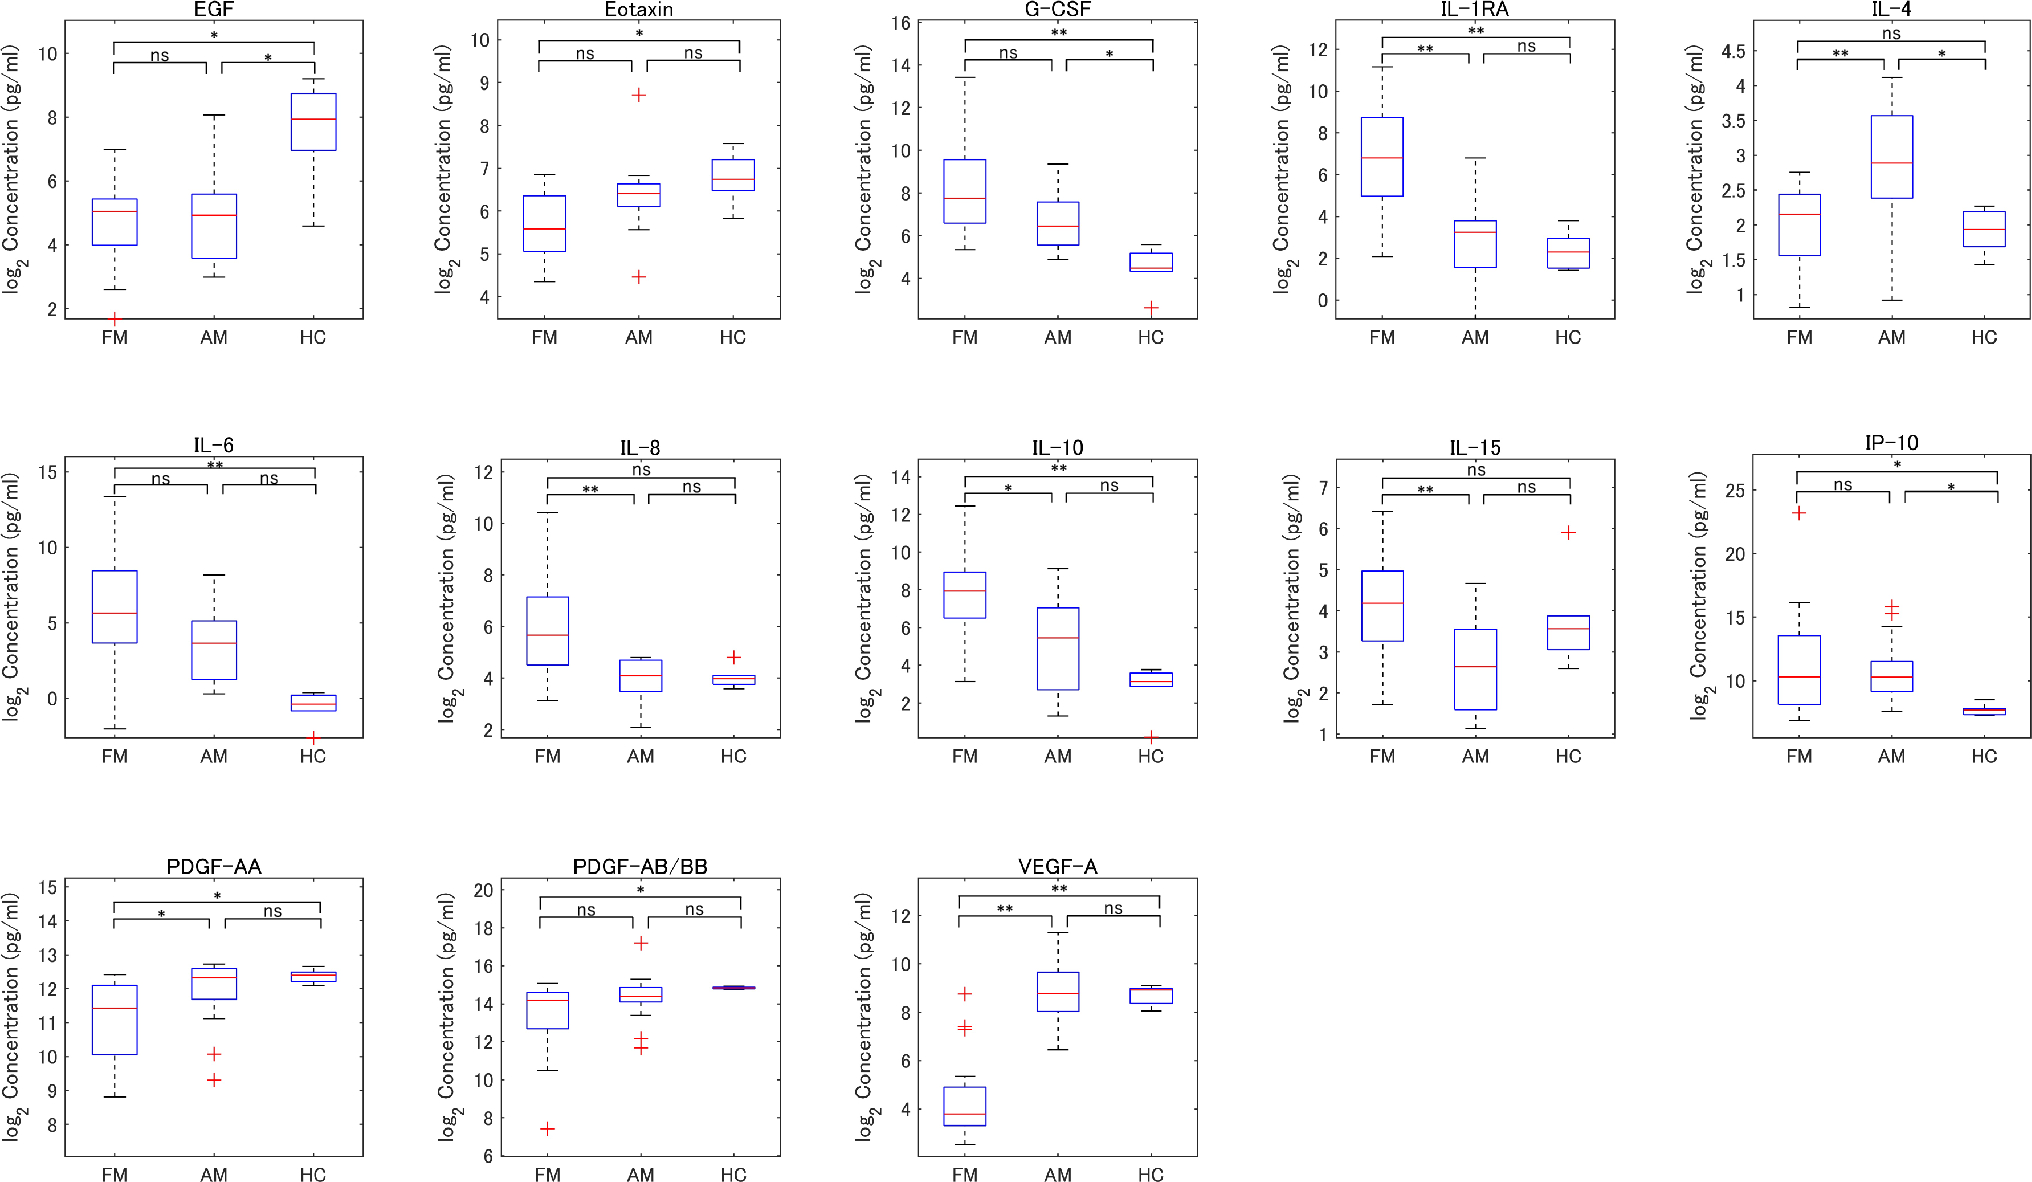 Analysis of Cytokine Profiles in Pediatric Myocarditis Multicenter Study